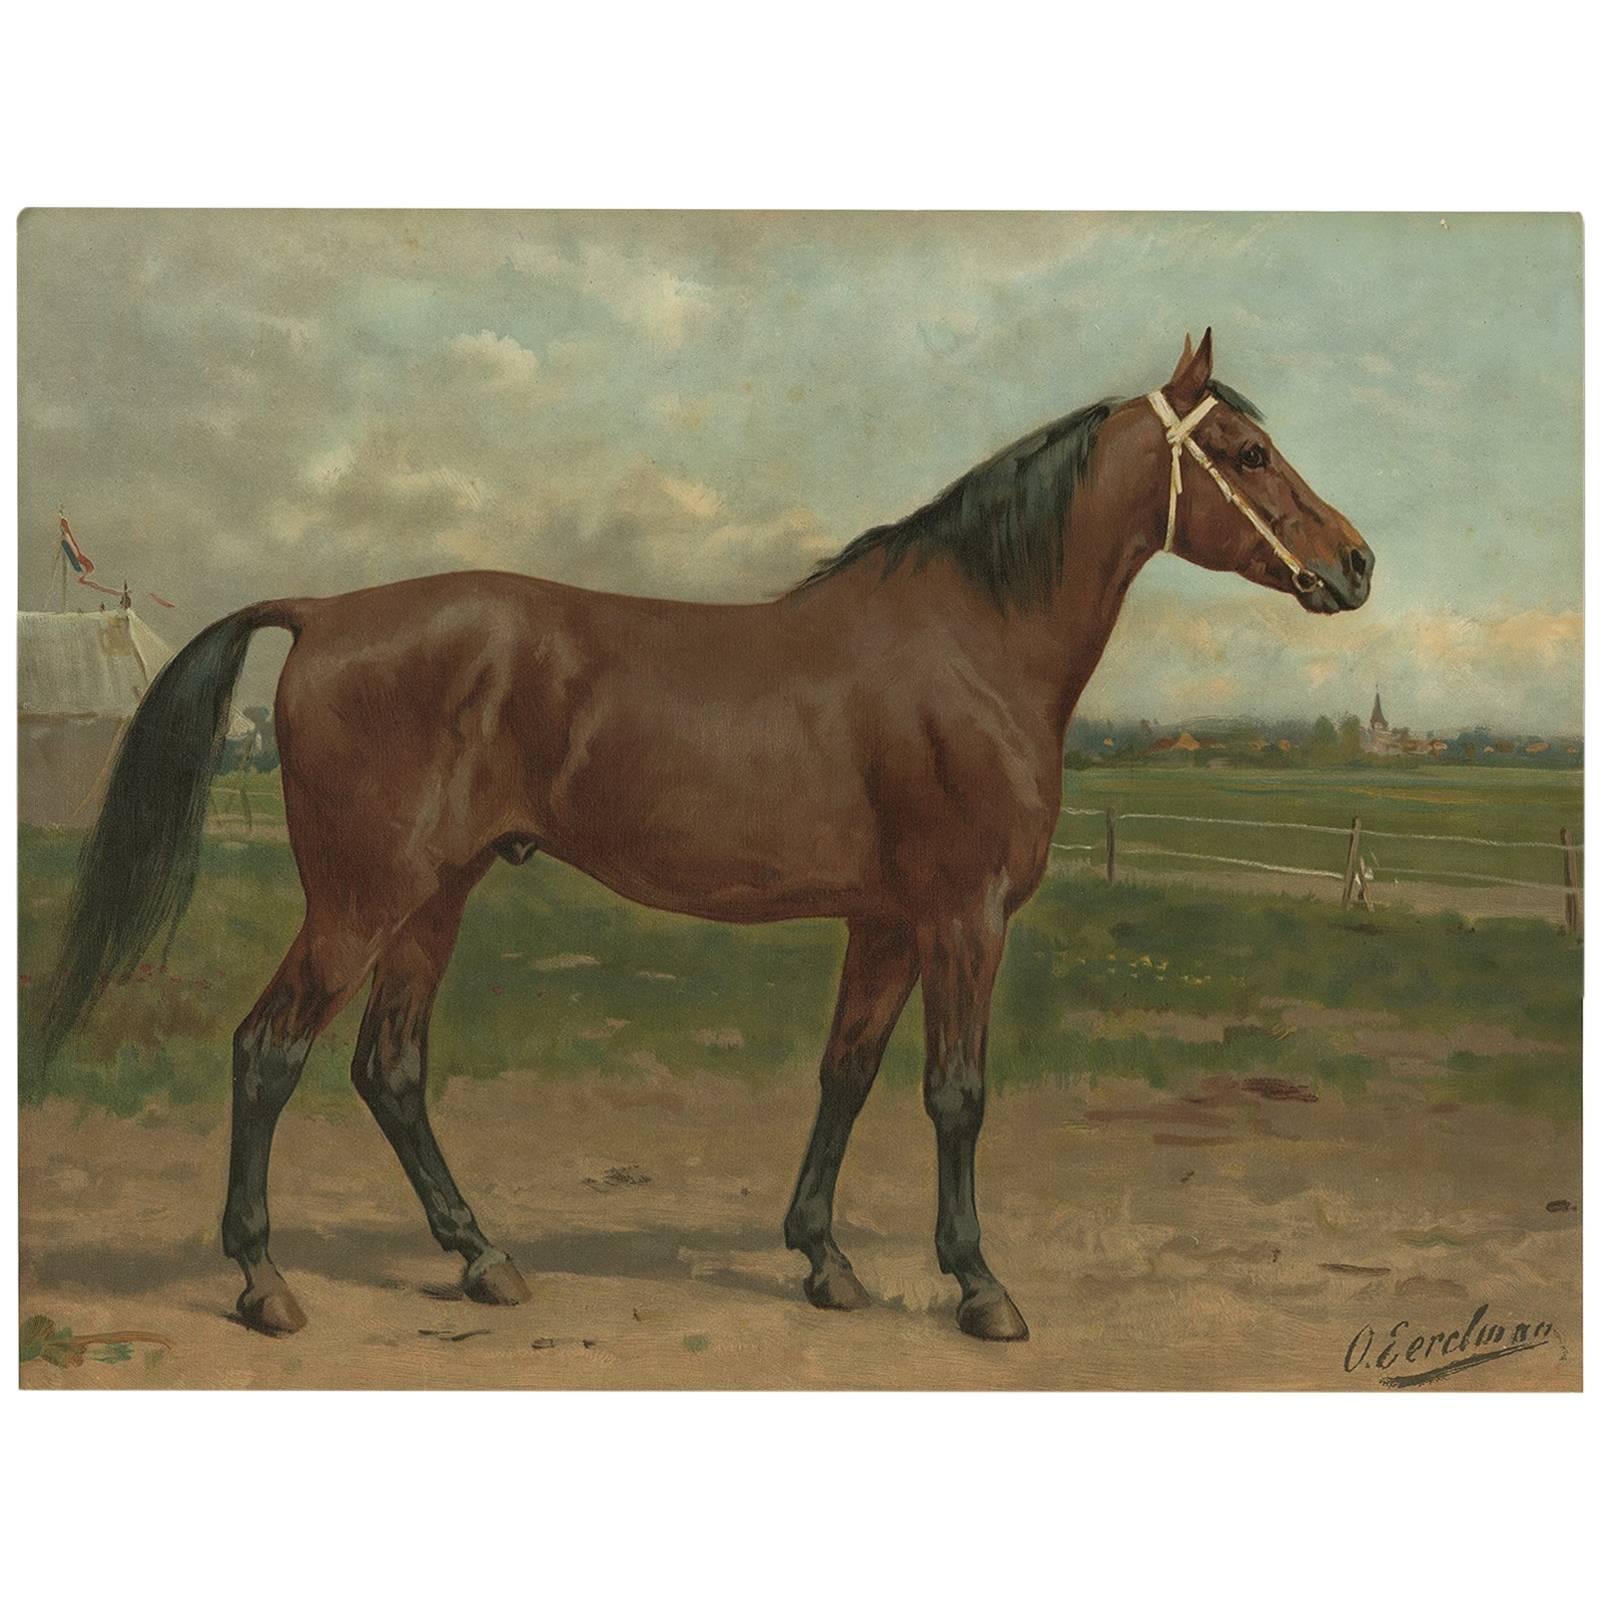 Antique Horse Print of an American Race Horse by O. Eerelman, 1898